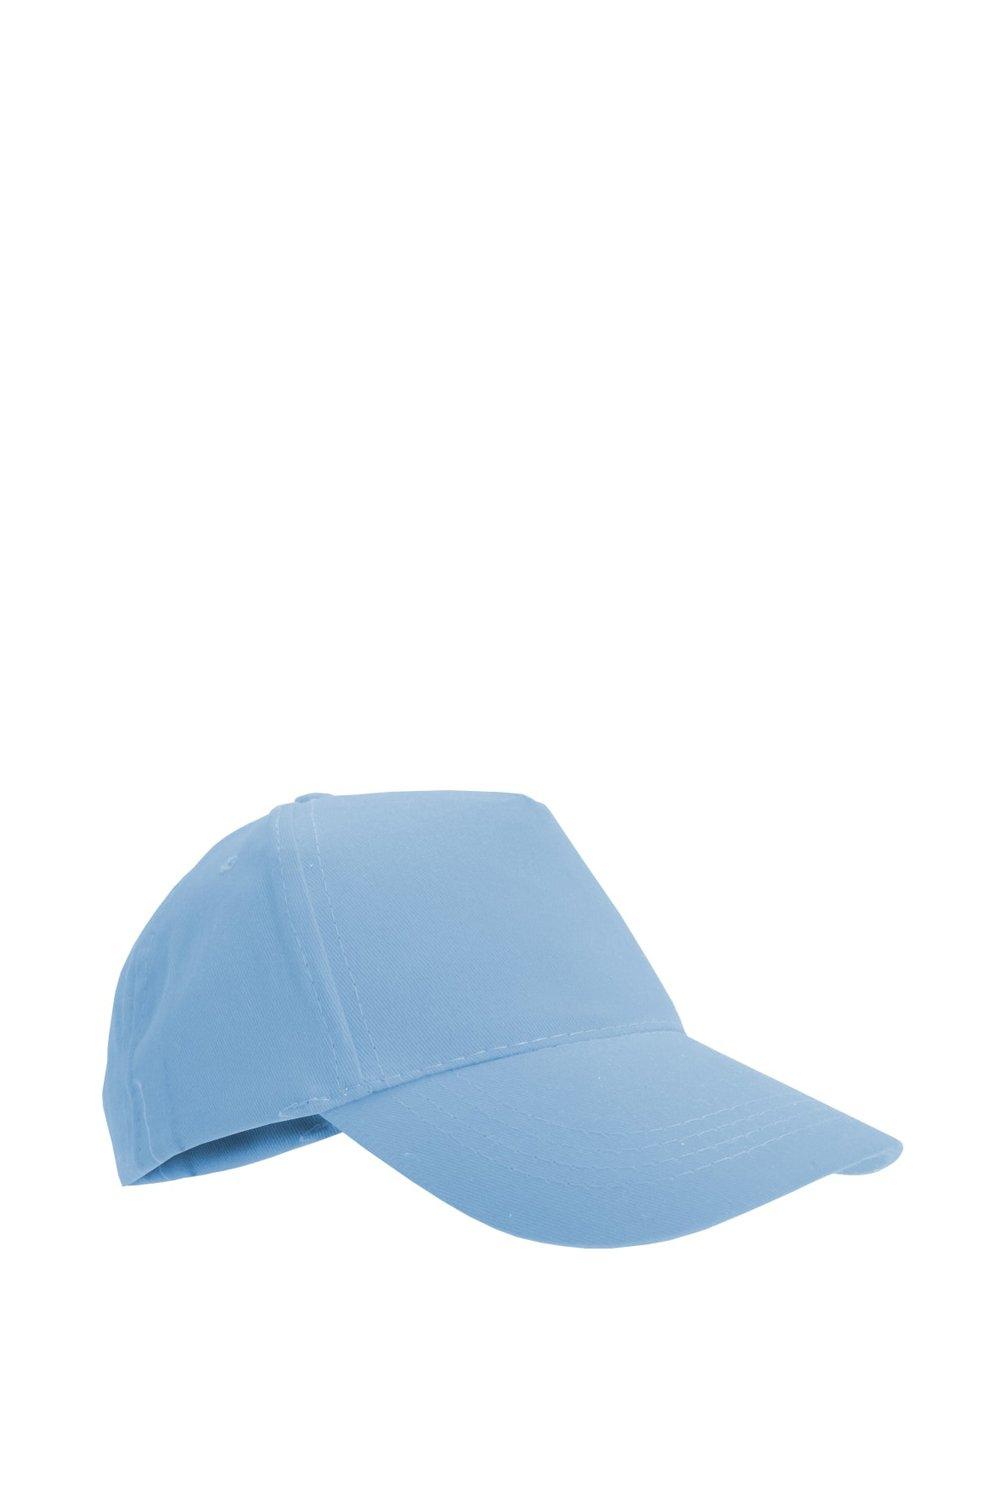 SOL'S Sunny Baseball Cap|blue